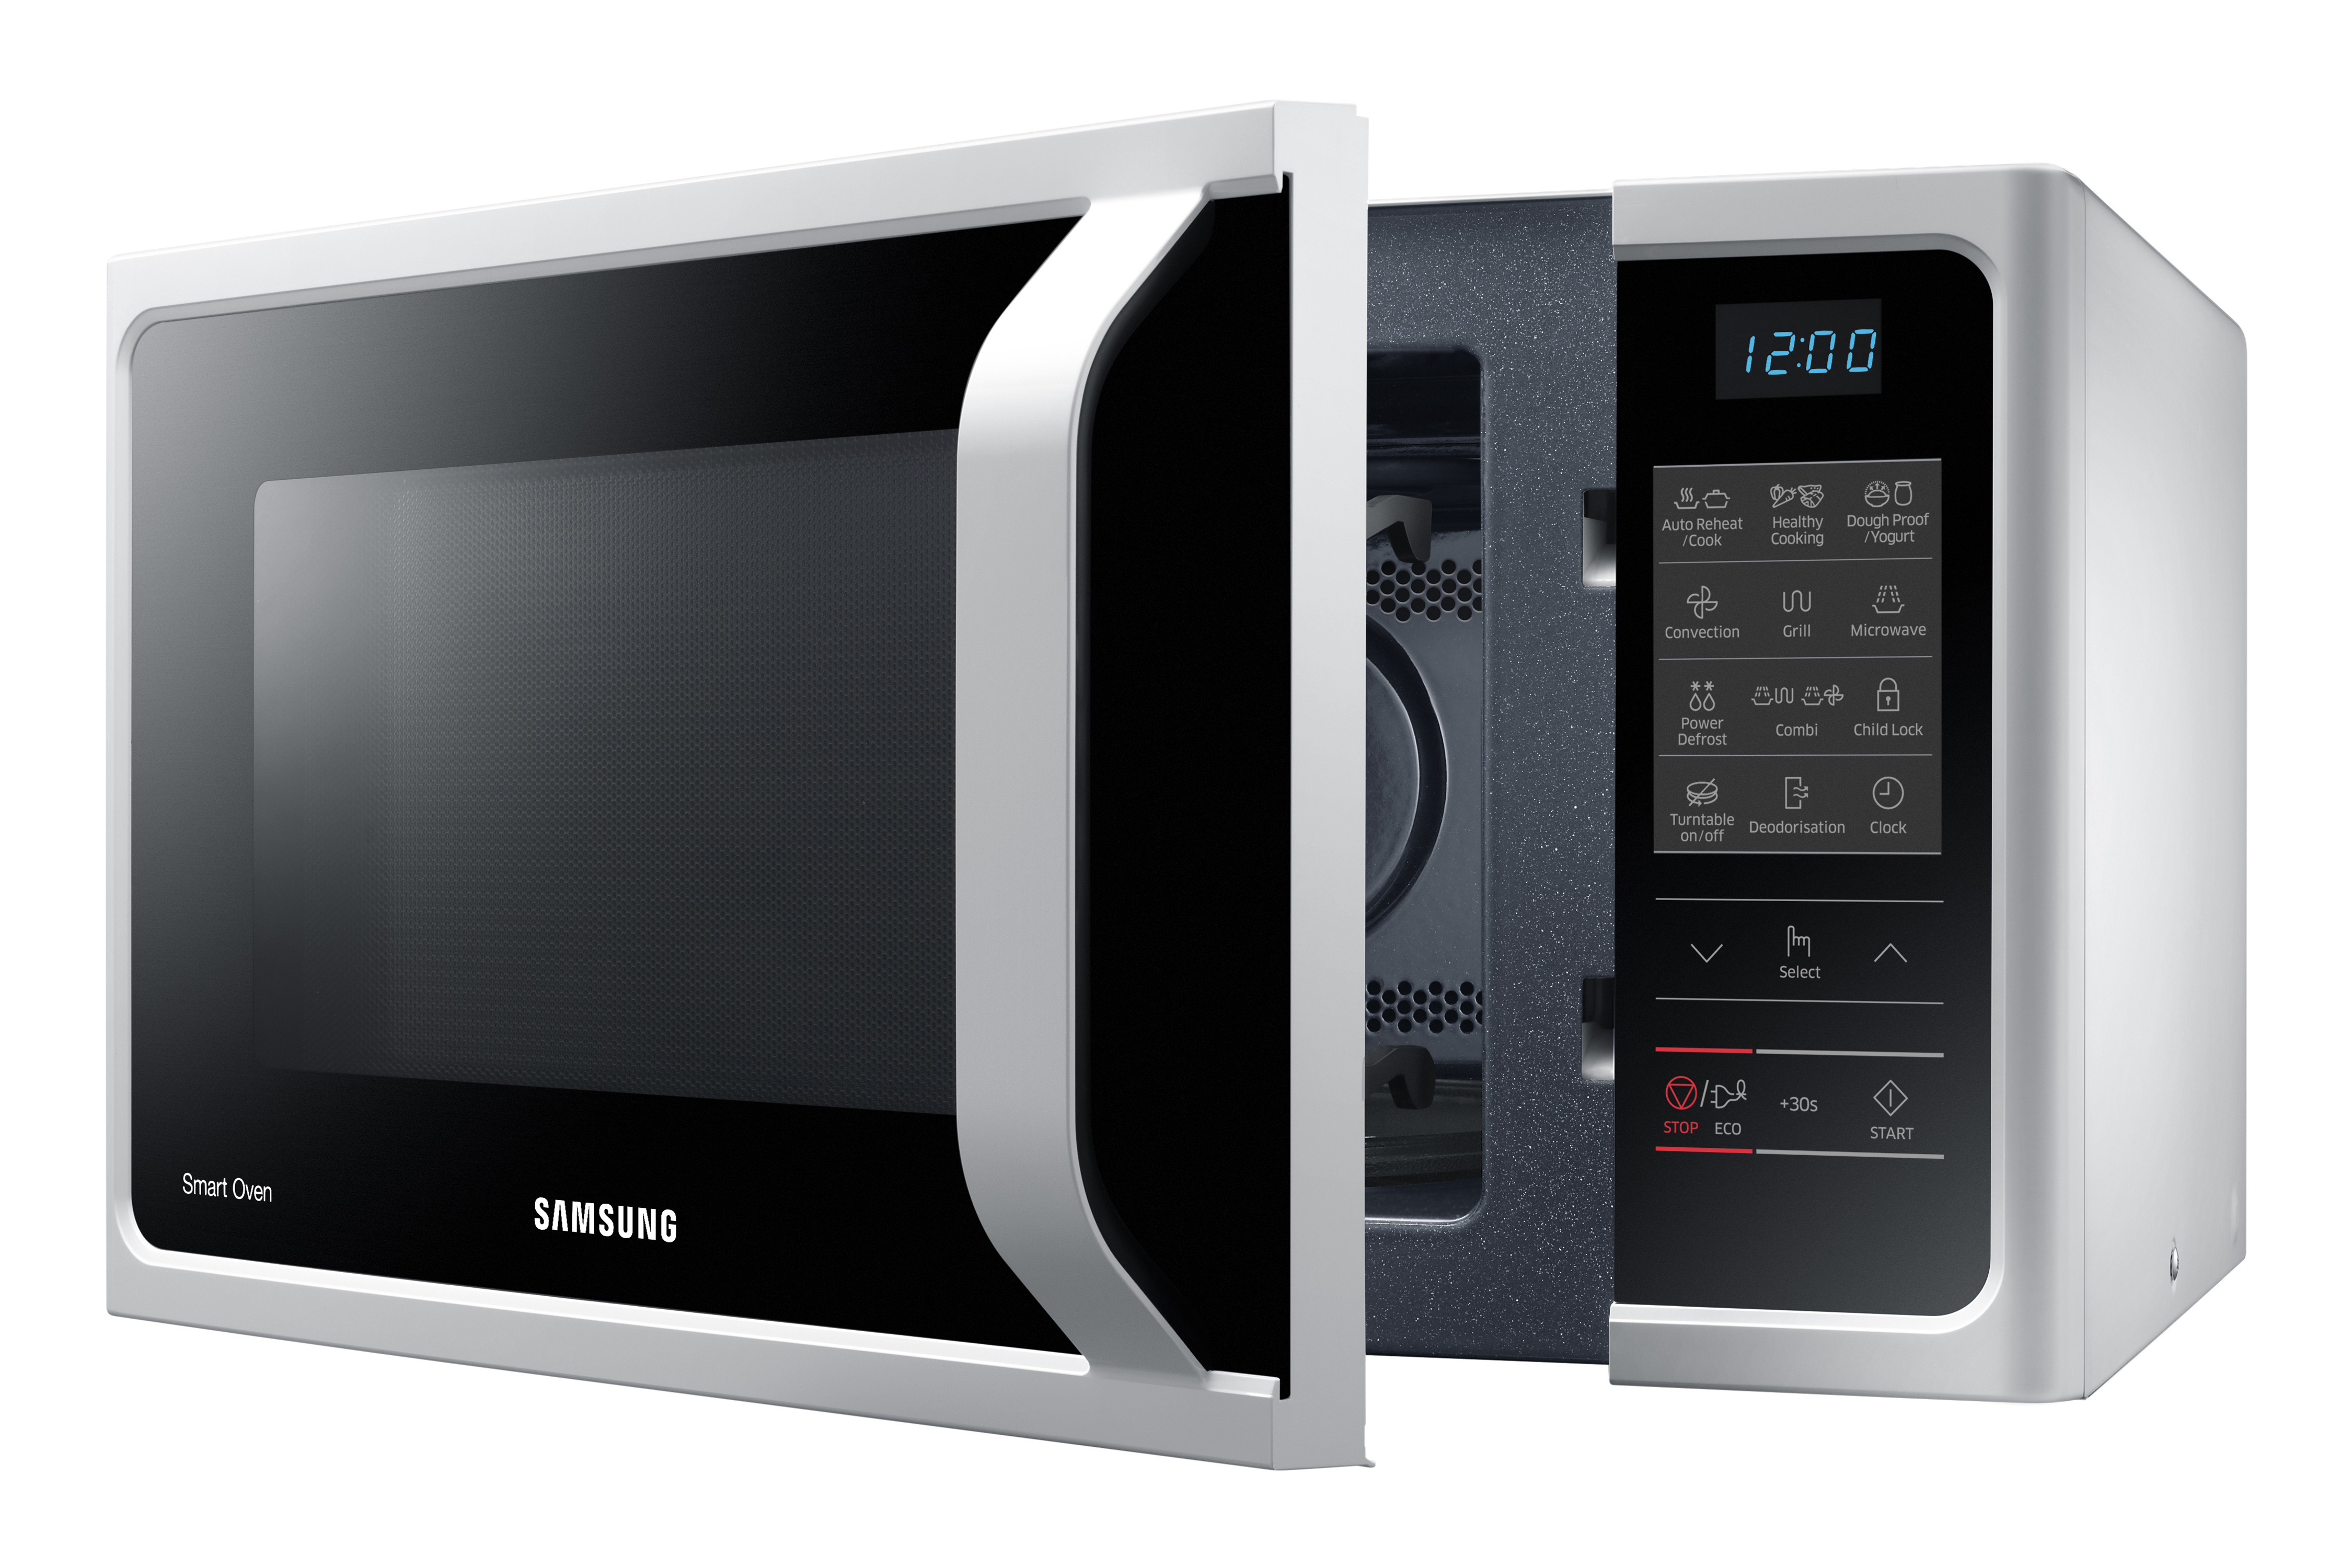 SAMSUNG MC28H5013AW/EG, Watt, Grillfunktion, Heißluftfunktion) (900 Mikrowelle